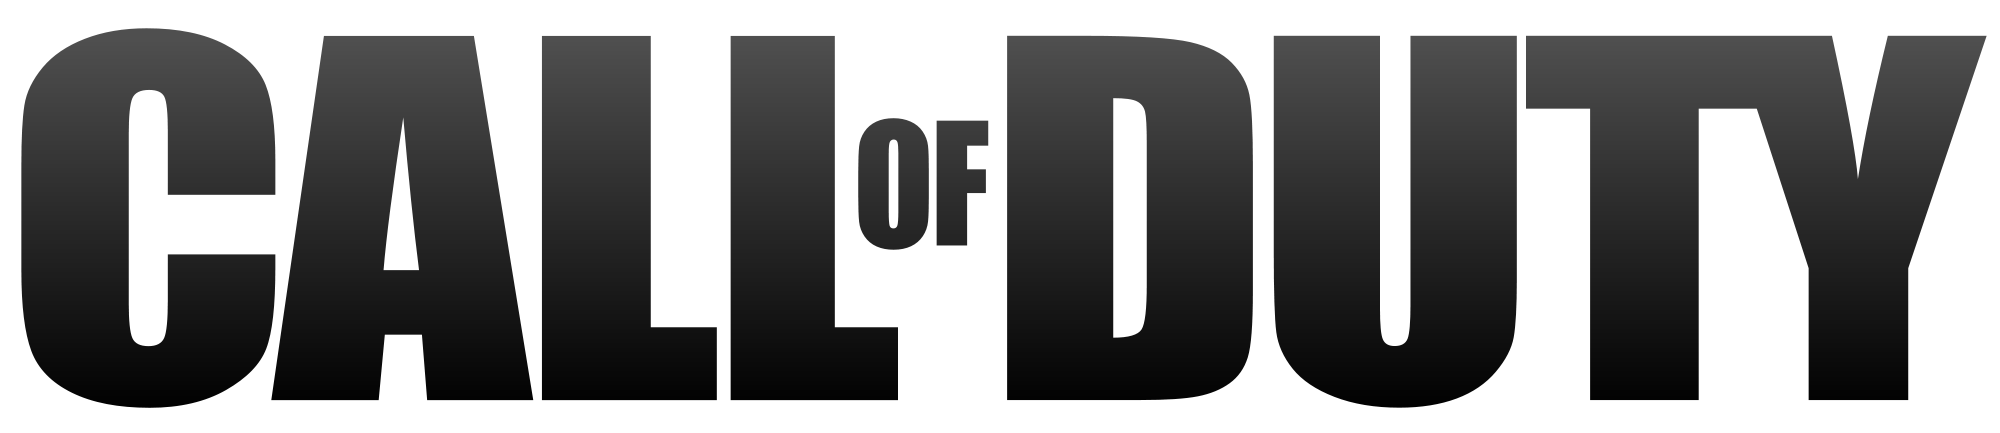 「CallofDuty」ロゴ